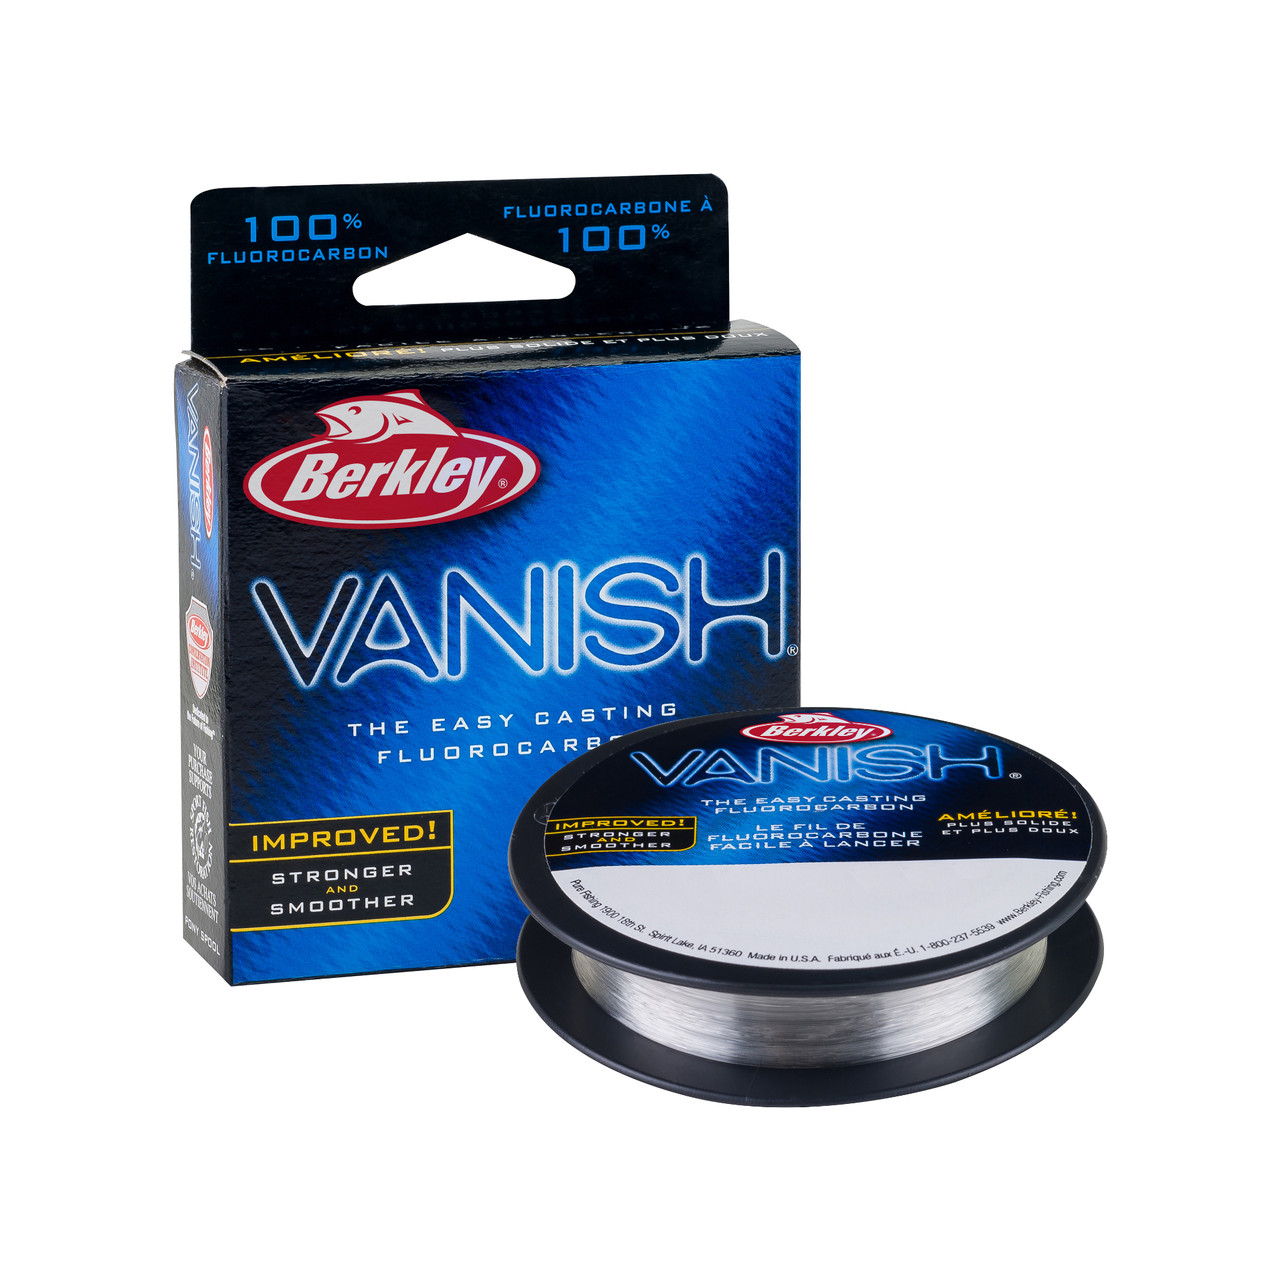 Berkley Vanish (40 yds) 15 lb Test Clear Line 100% Fluorocarbon